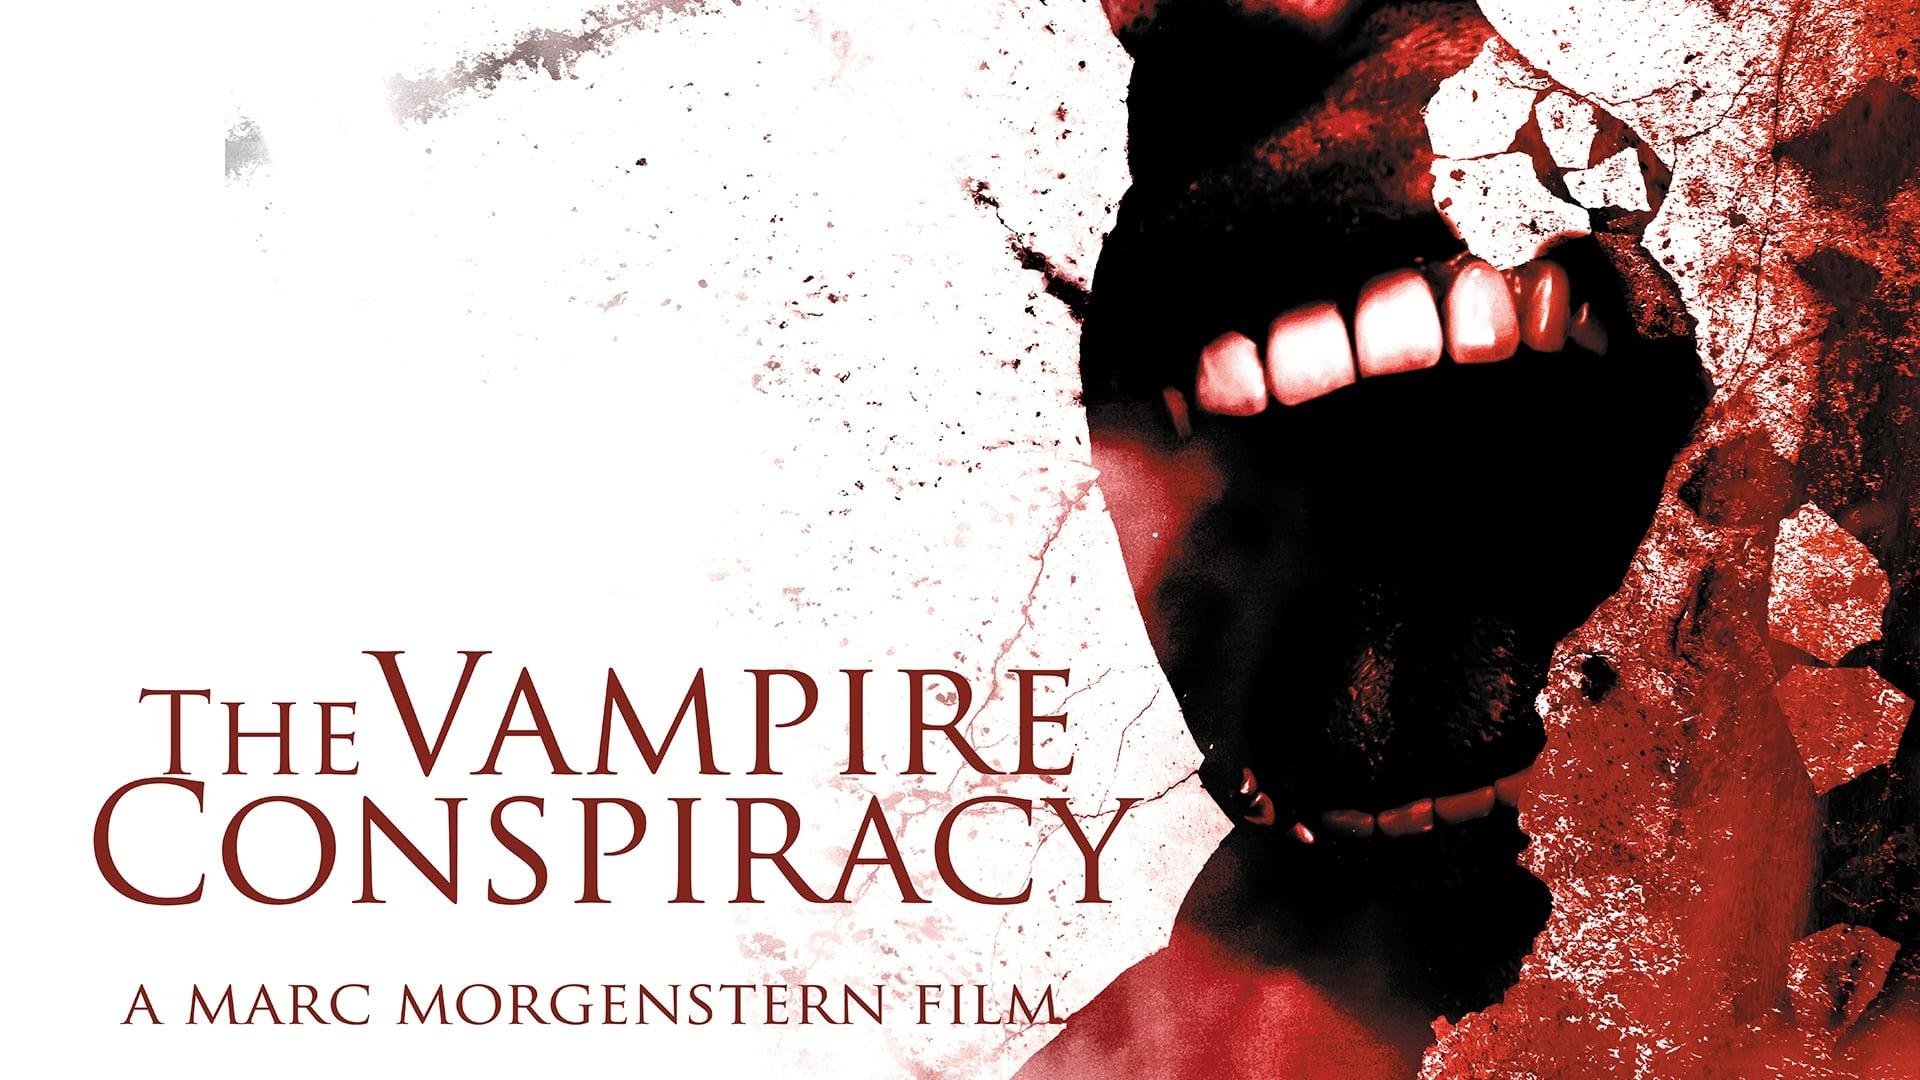 The Vampire Conspiracy backdrop